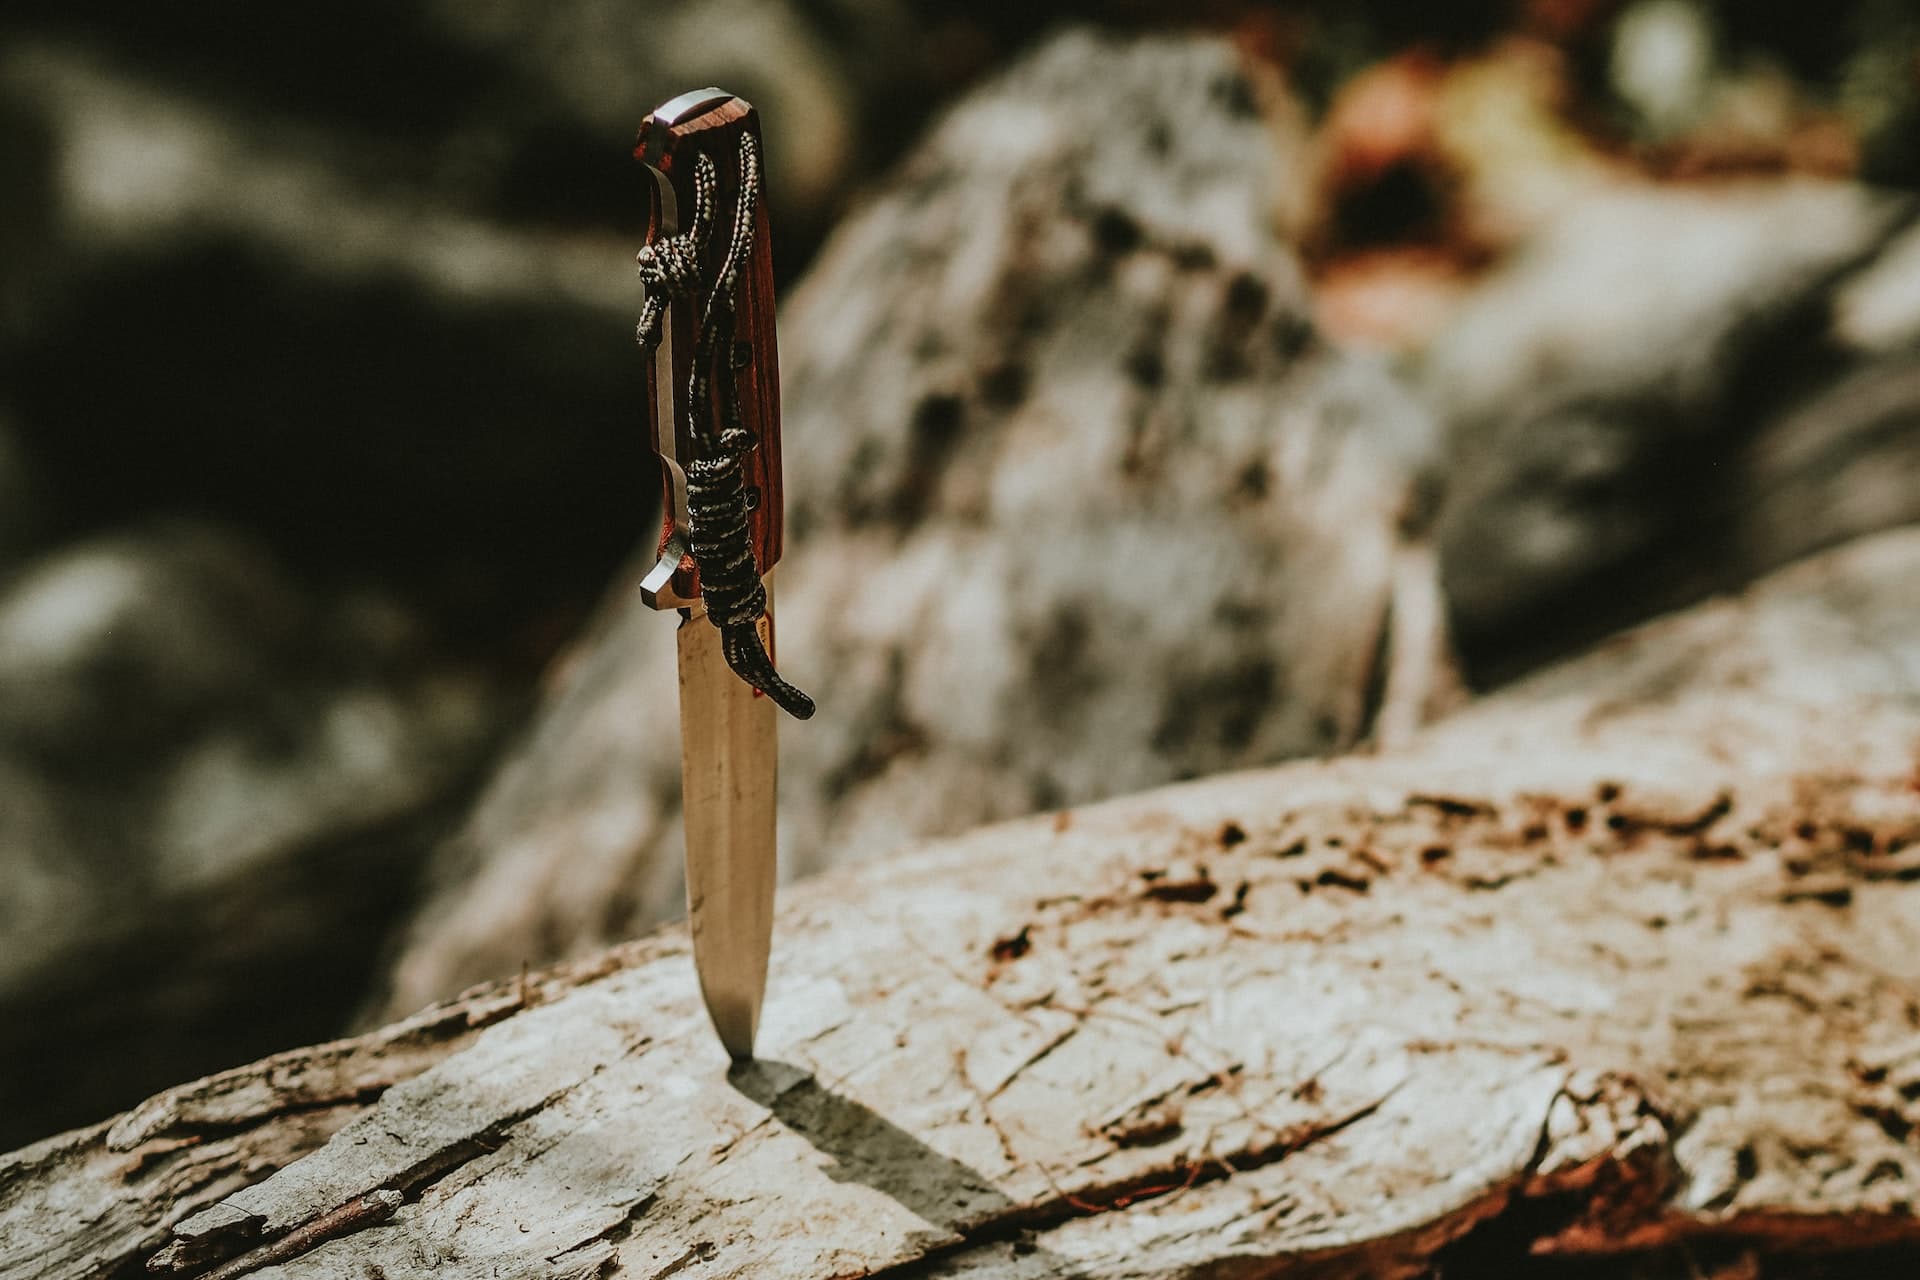 The Best Survival Knife? A Damascus Steel Pocket Knife!